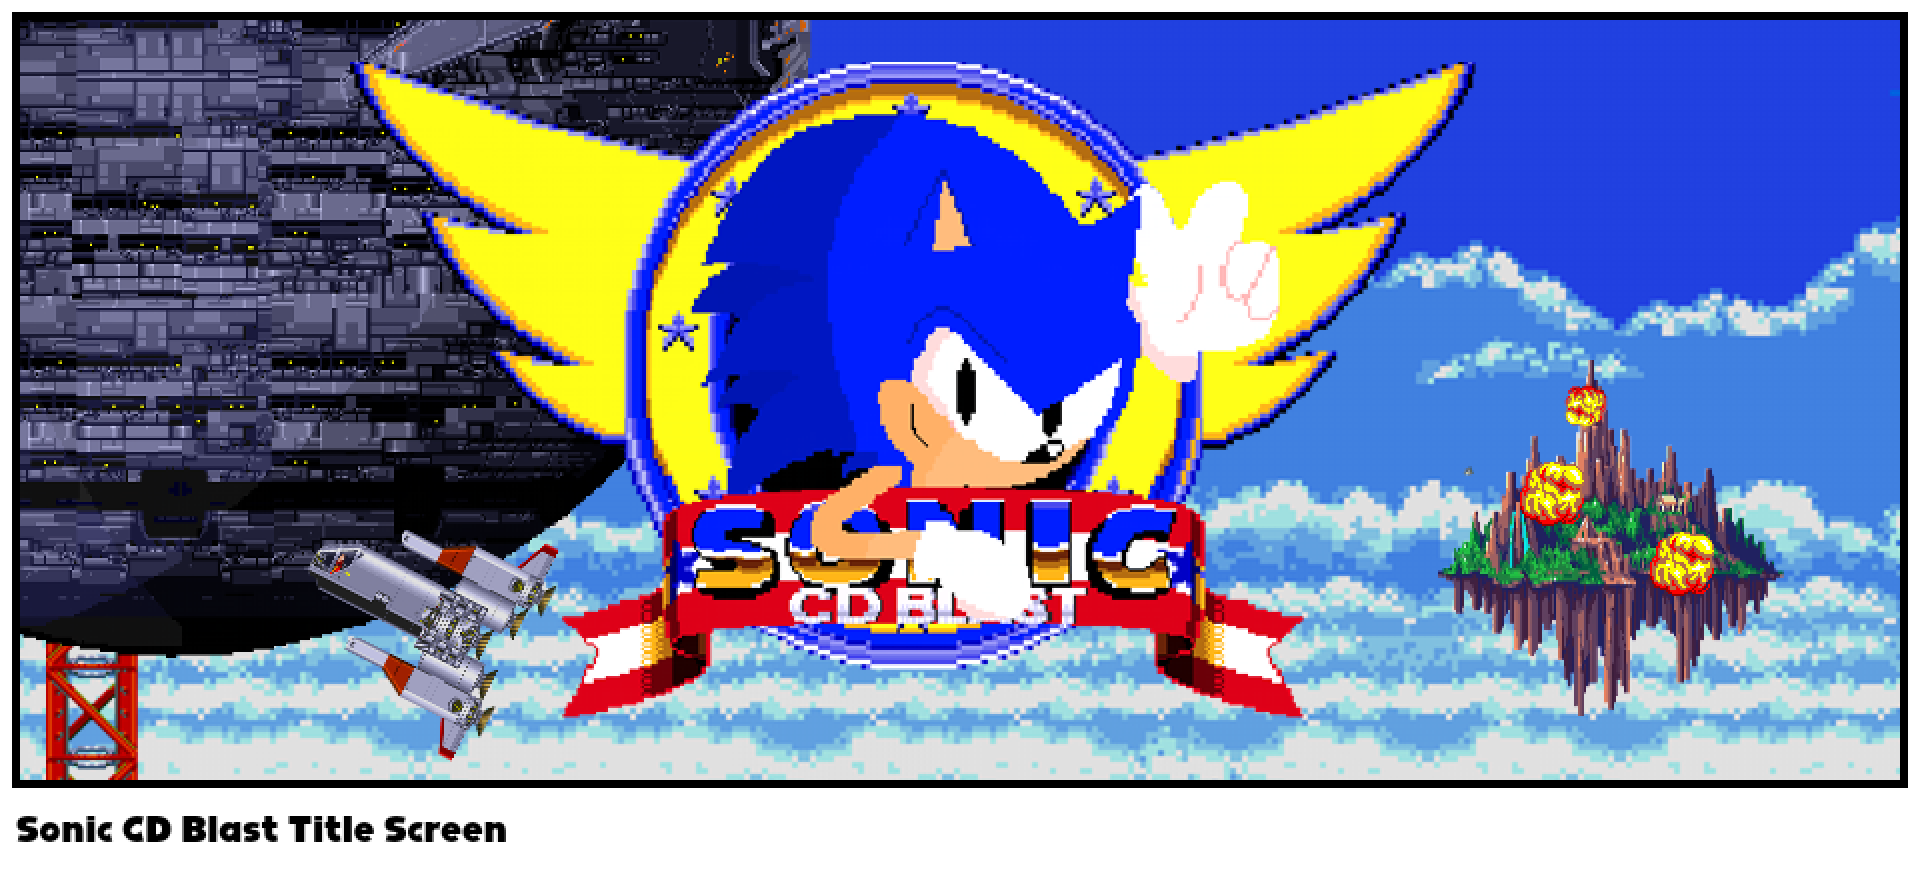 Sonic CD Blast Title Screen